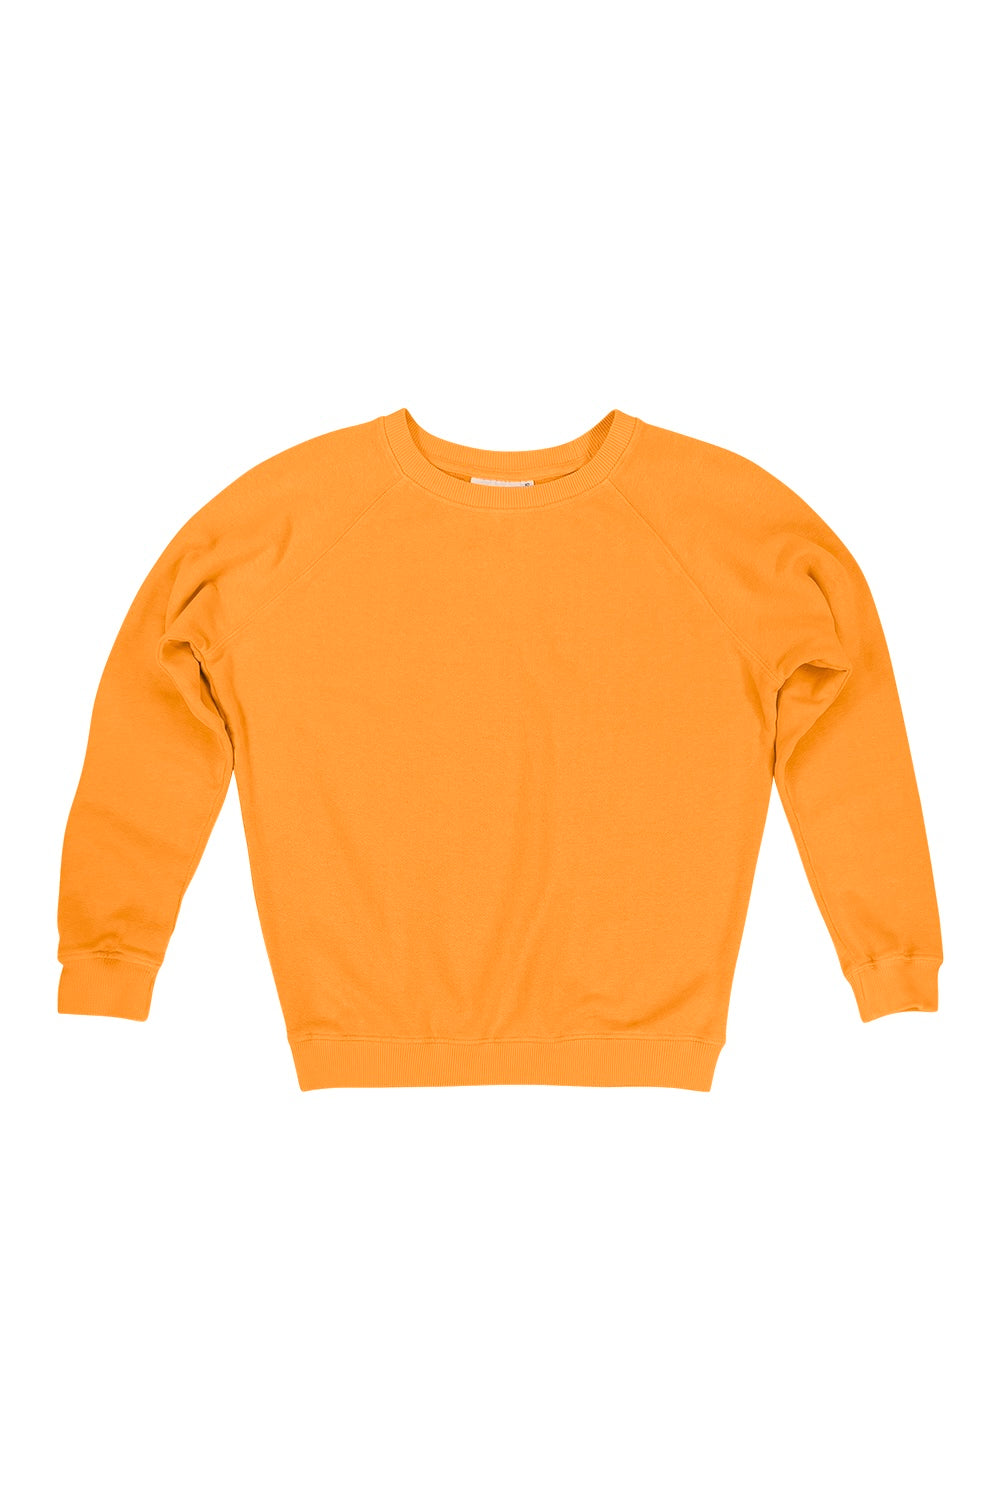 Bonfire Raglan Sweatshirt | Jungmaven Hemp Clothing & Accessories / Color: Apricot Crush